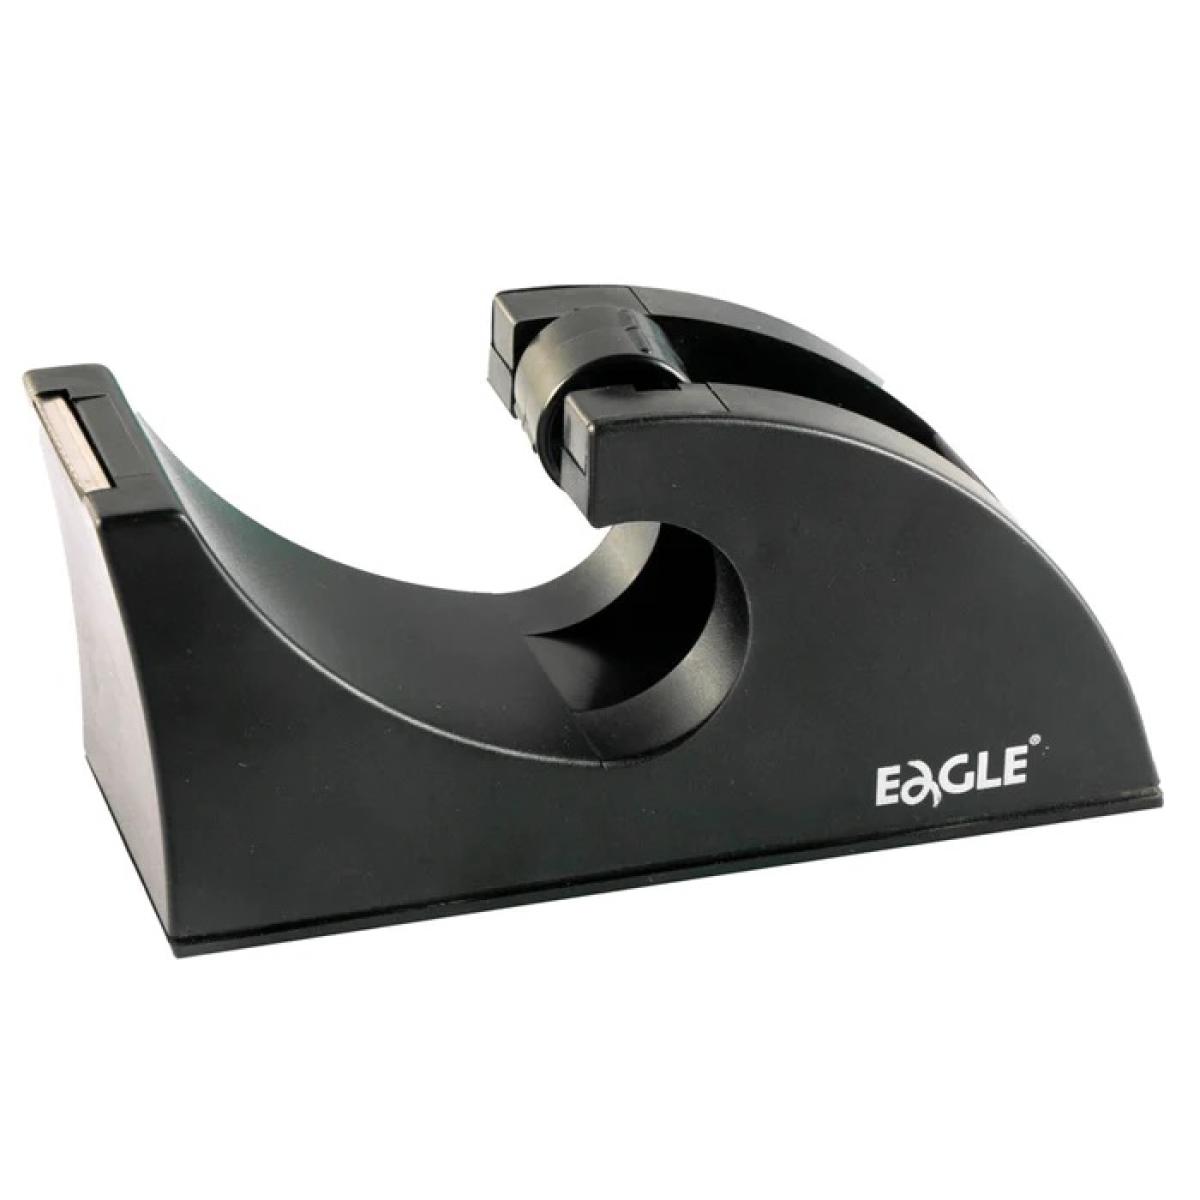 Eagle Tape Dispenser 1 inch